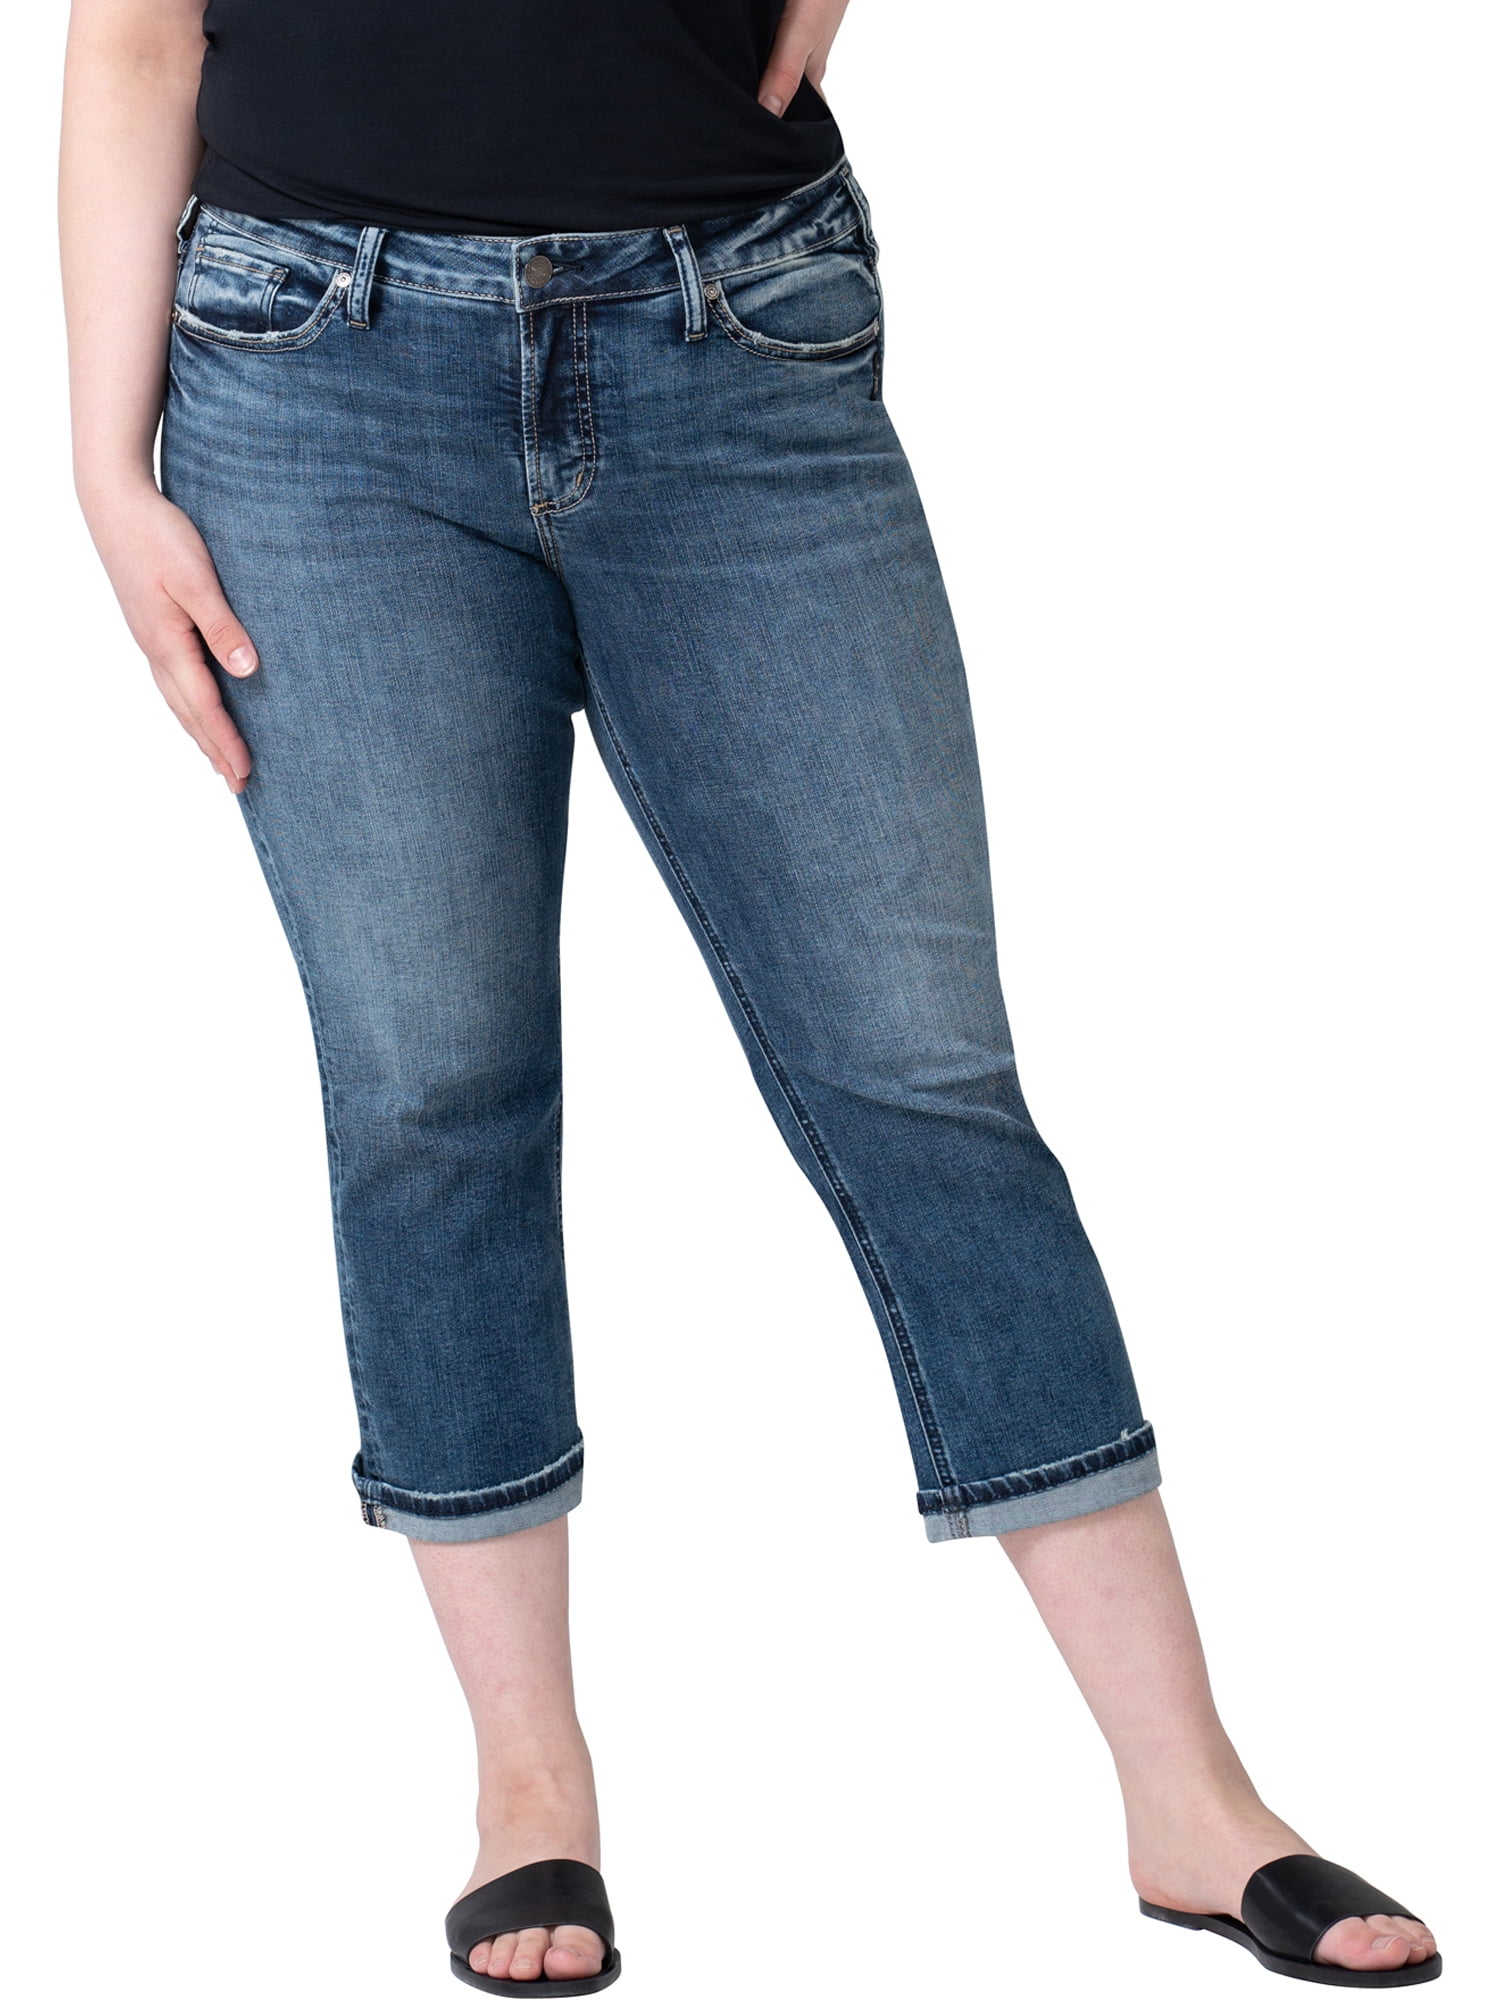 Silver Jeans Co. Women's Plus Size Elyse Mid Rise Capri